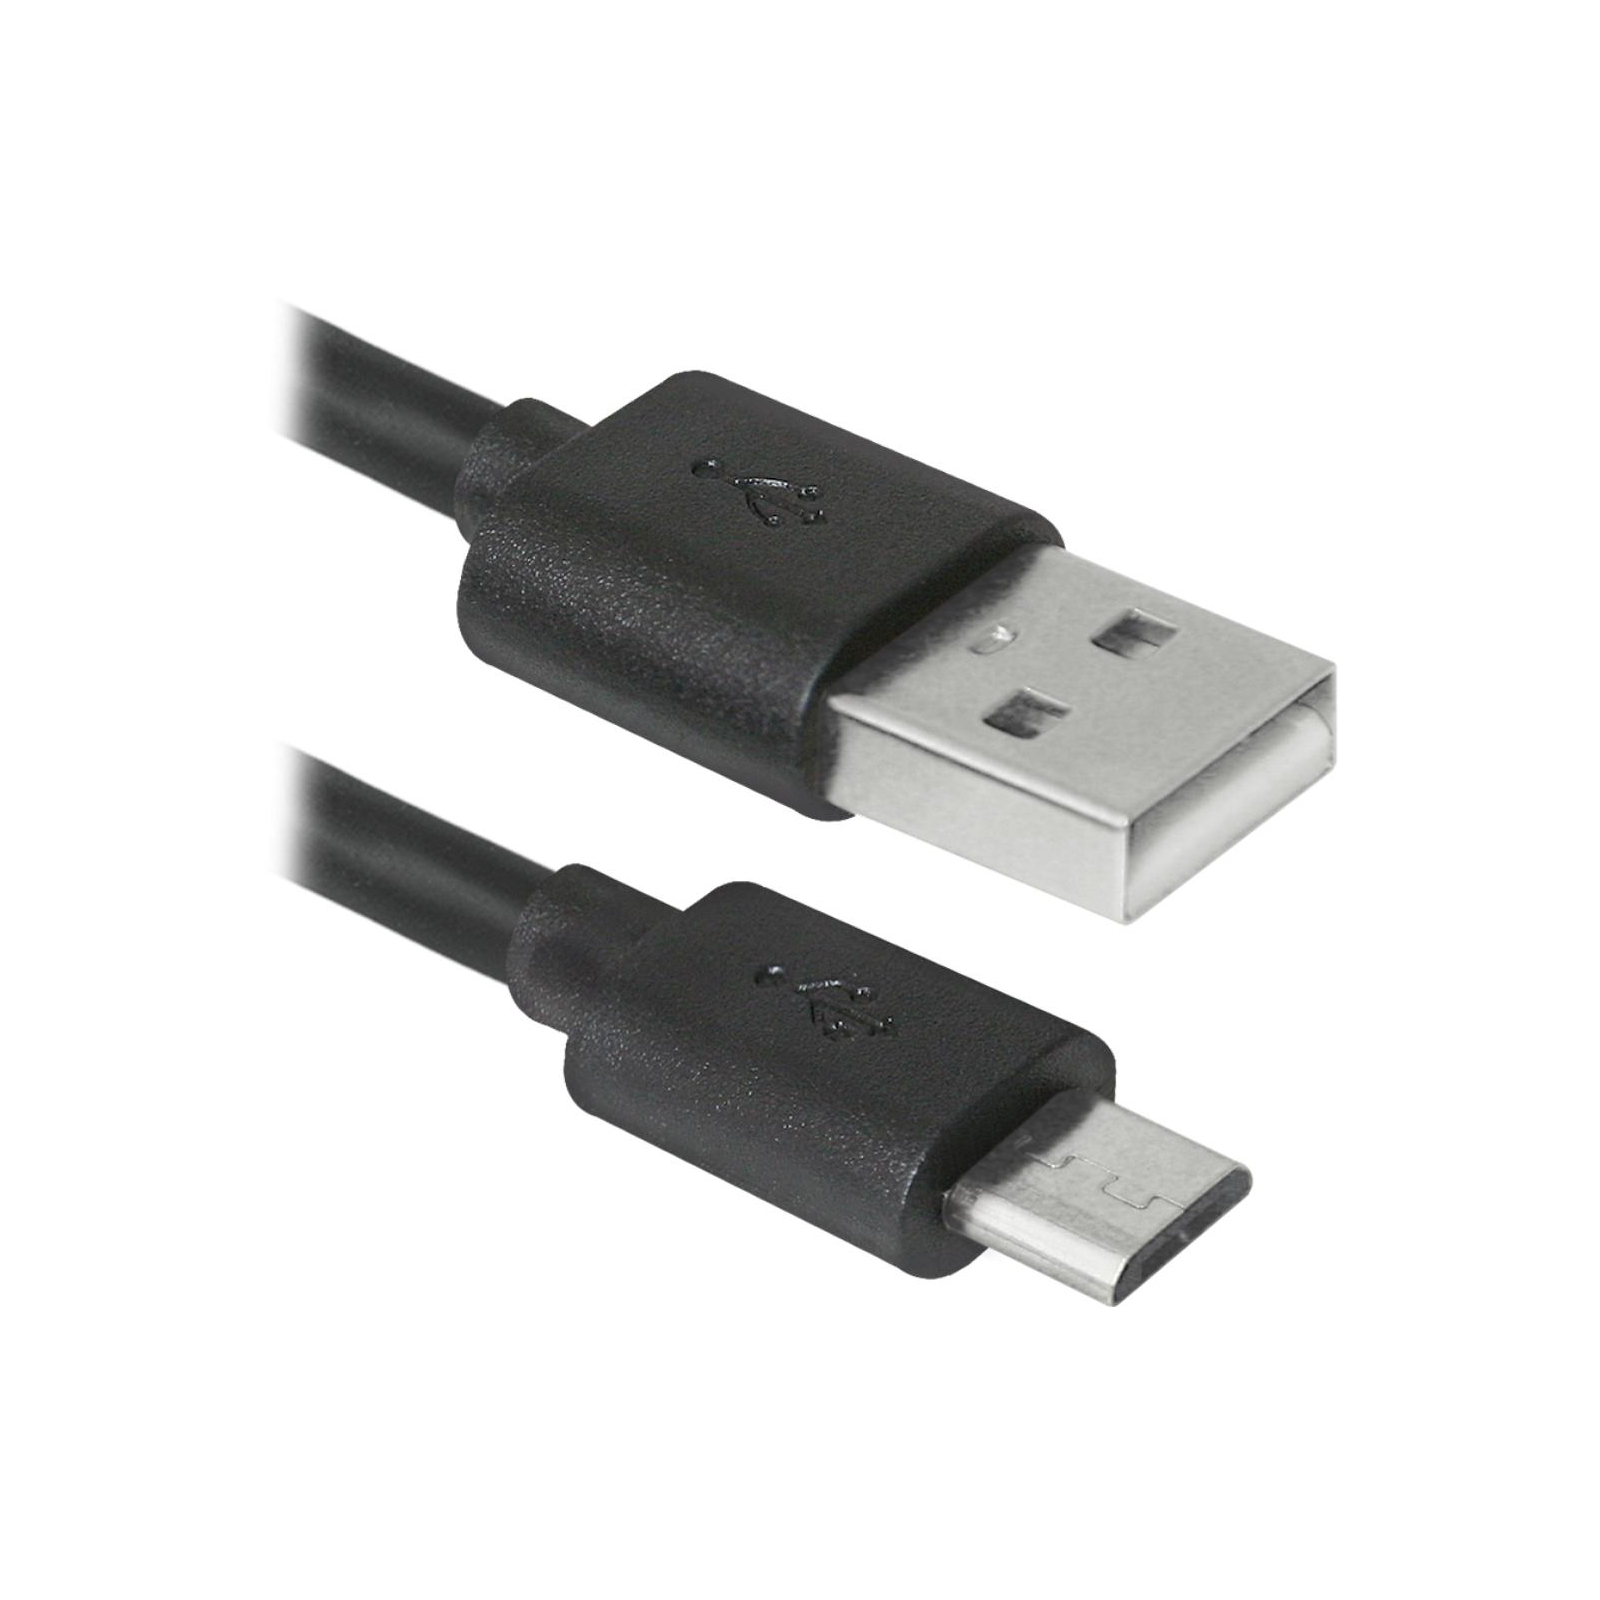 Дата кабель USB08-03BH USB - Micro USB, black, 1m Defender (87476)